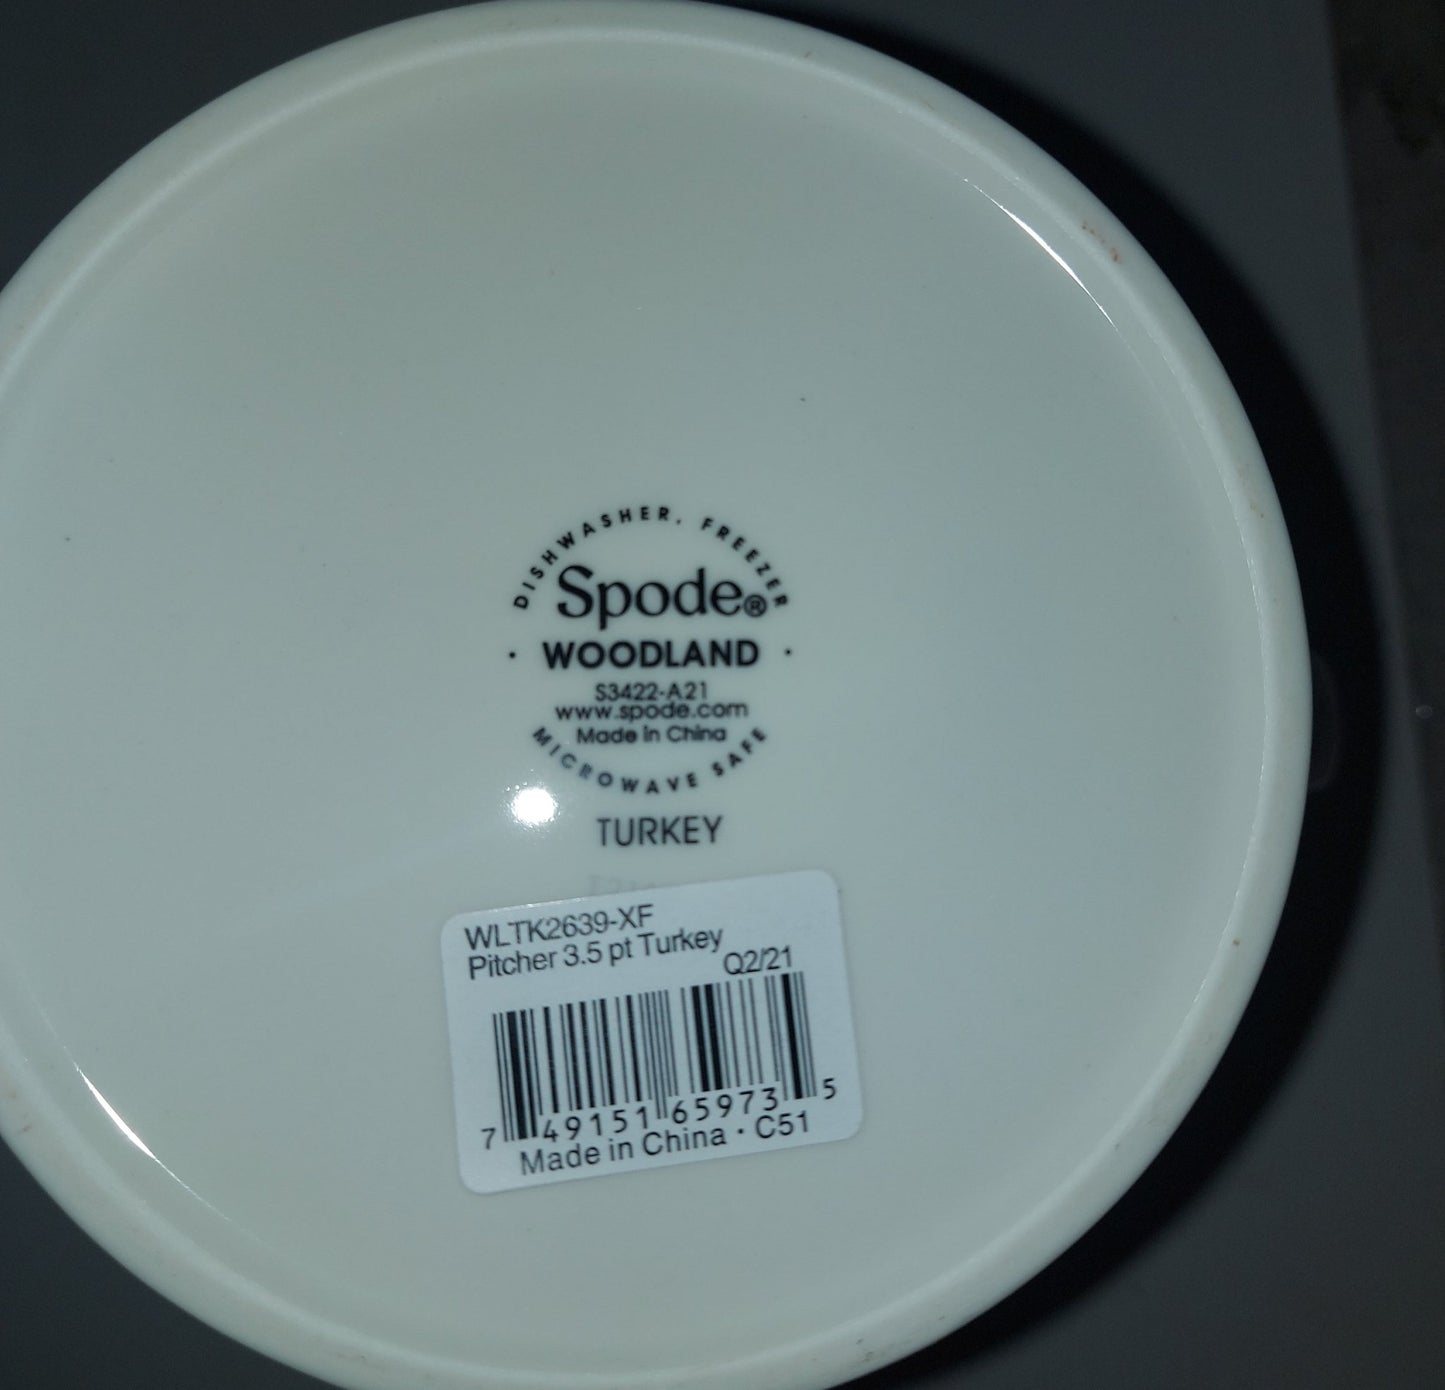 Spode Woodland 3.5 PT turkey PITCHER- PRICE CUT!! - Shoppedeals